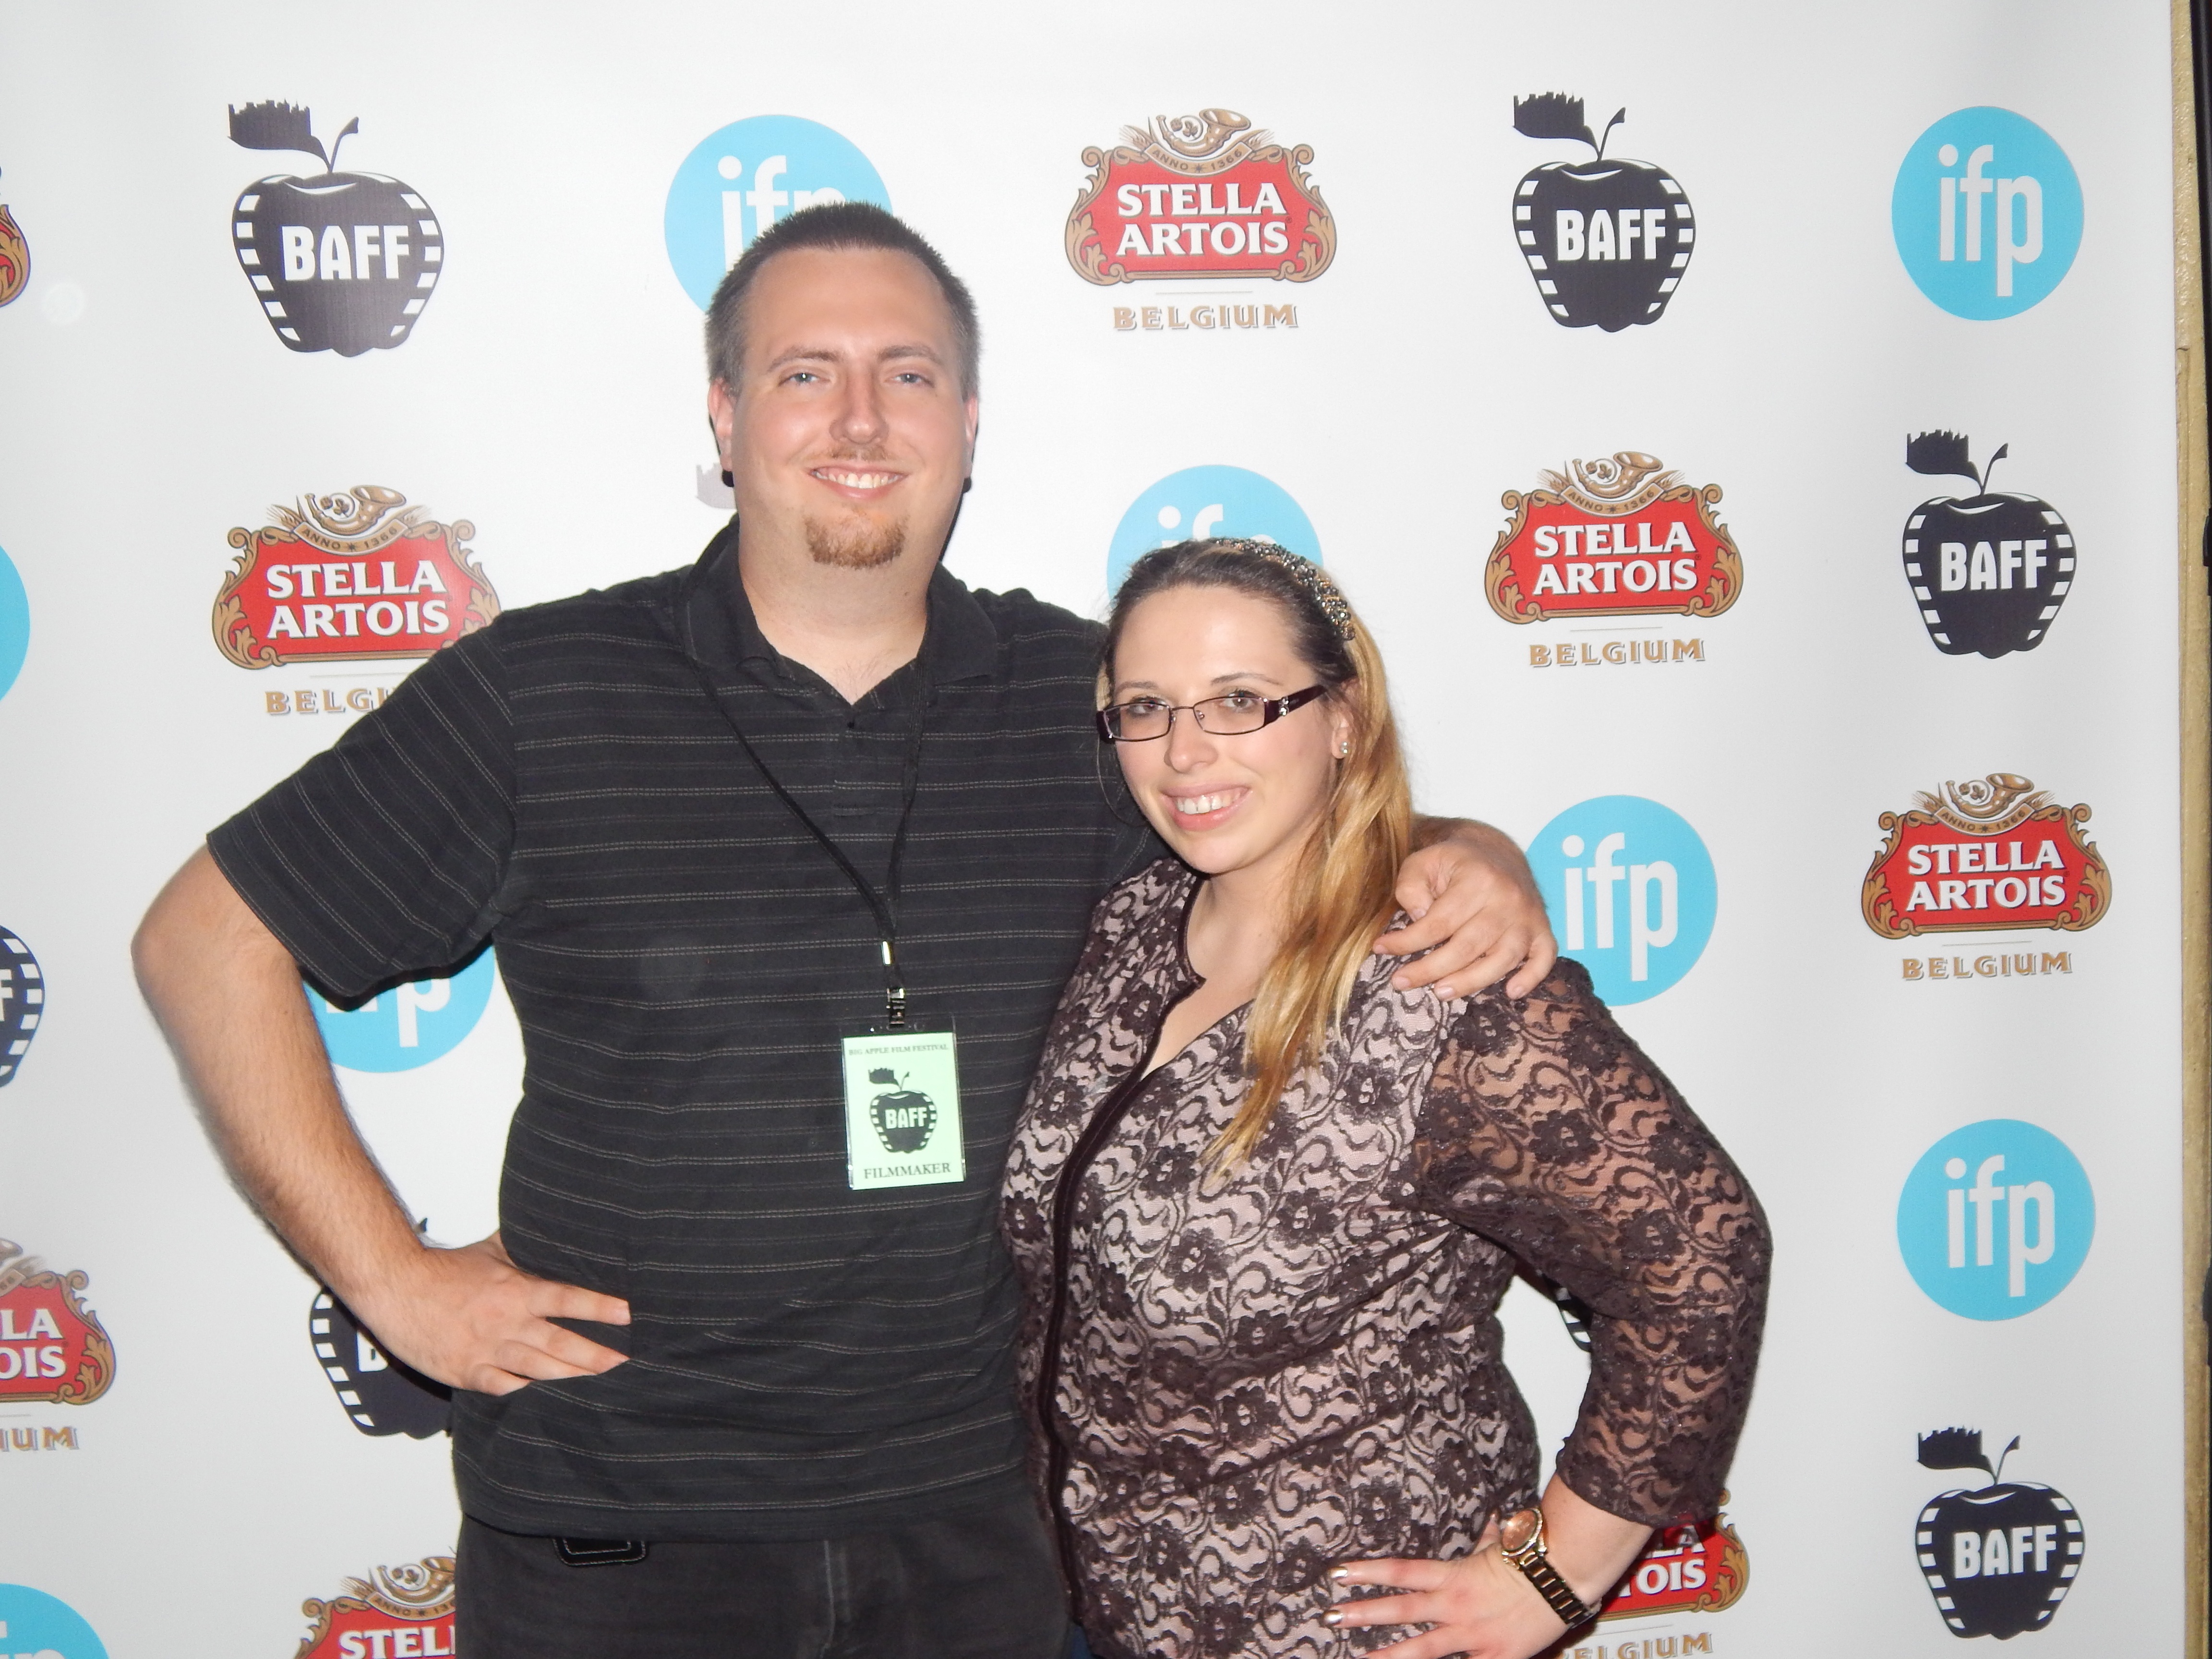 Dr. Pegg Film Festival Screening: Big Apple Film Festival 2014 (From Left to Right) Blake Zawadzki and Aurora Mindur